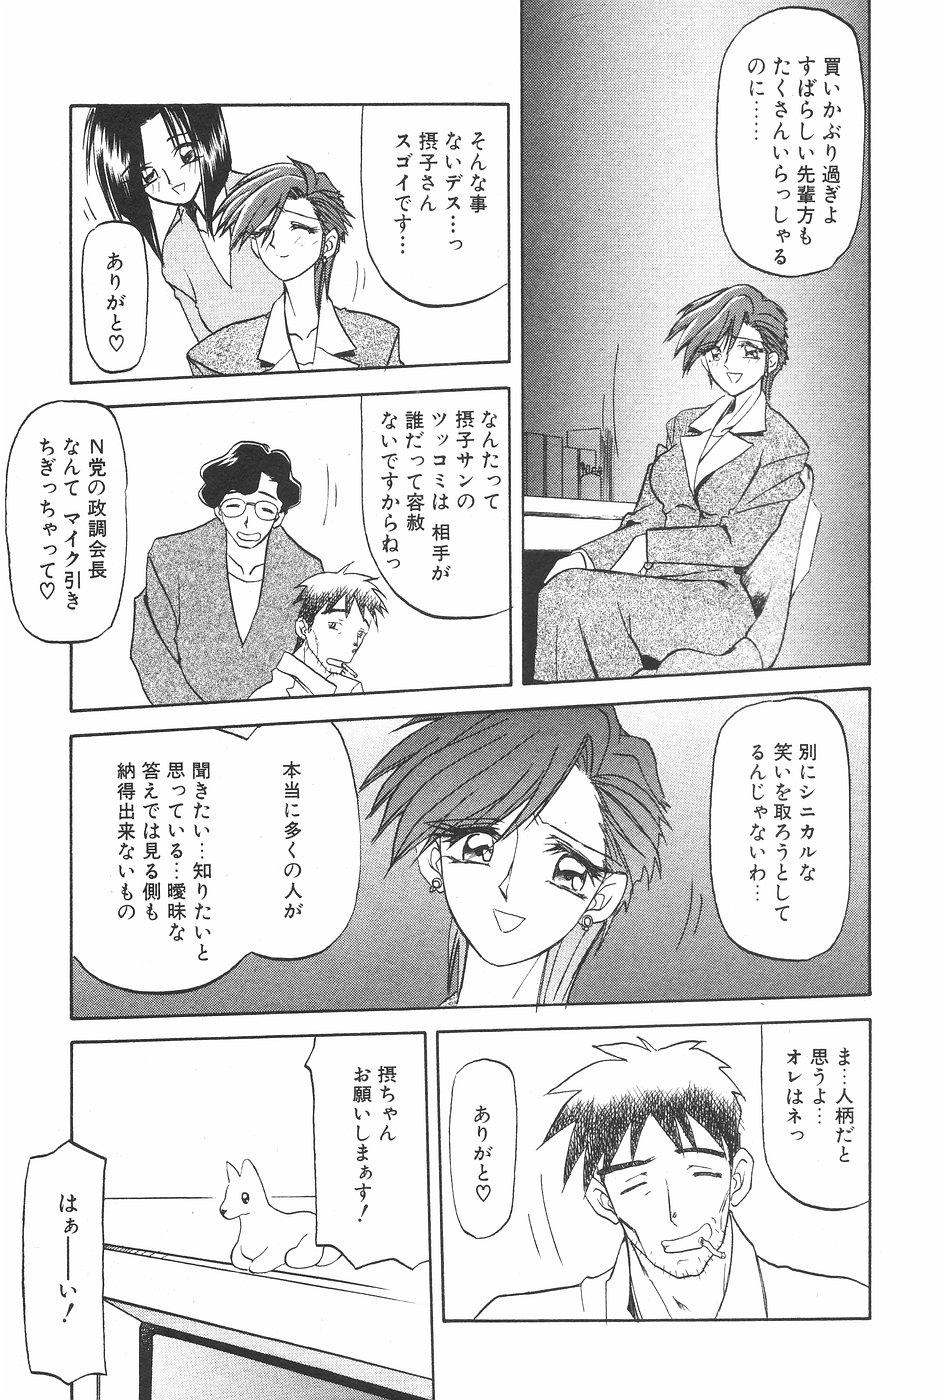 Manga Hotmilk 1997-07 76